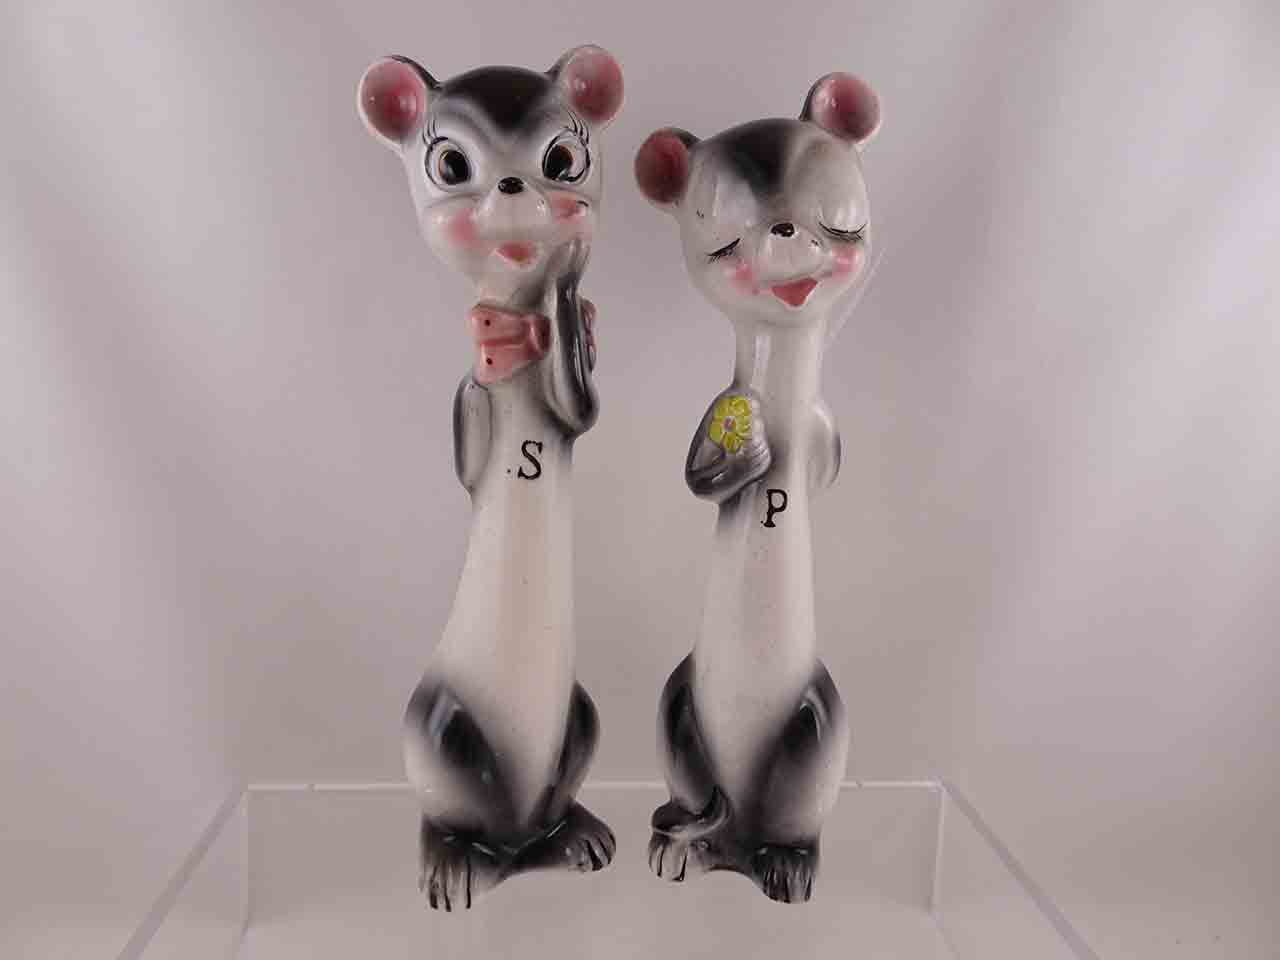 Japan Stamped 3729 tallboy series of salt and pepper shakers - mice